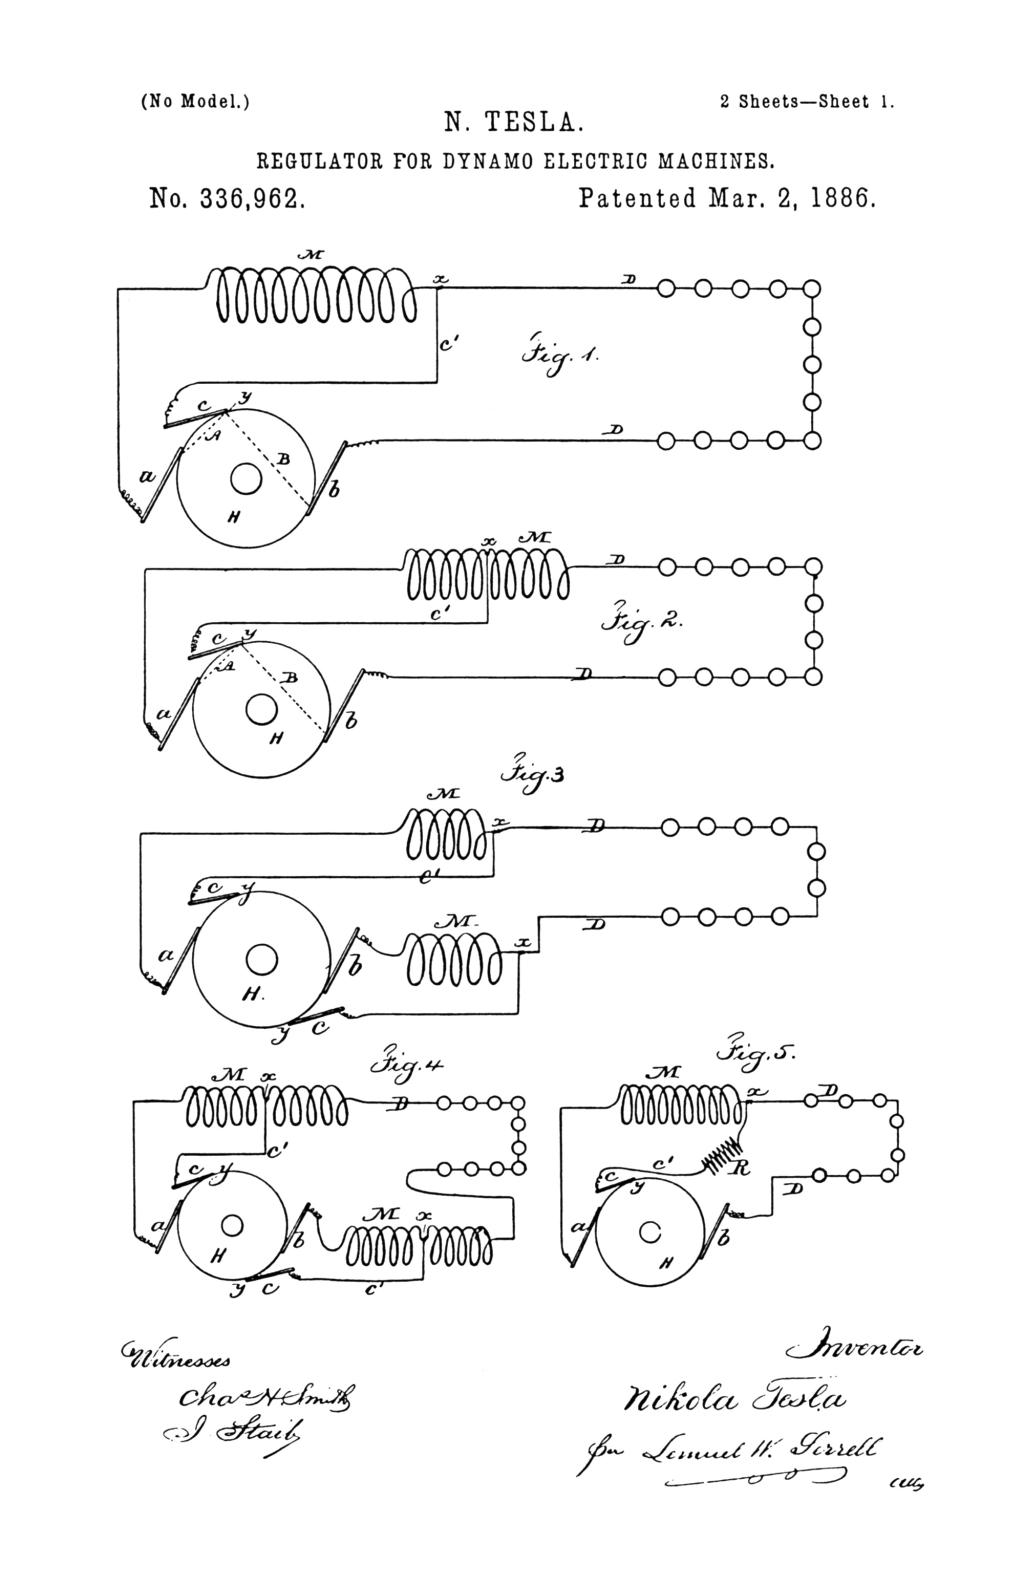 Nikola Tesla U.S. Patent 336,962 - Regulator for Dynamo-Electric Machines - Image 1